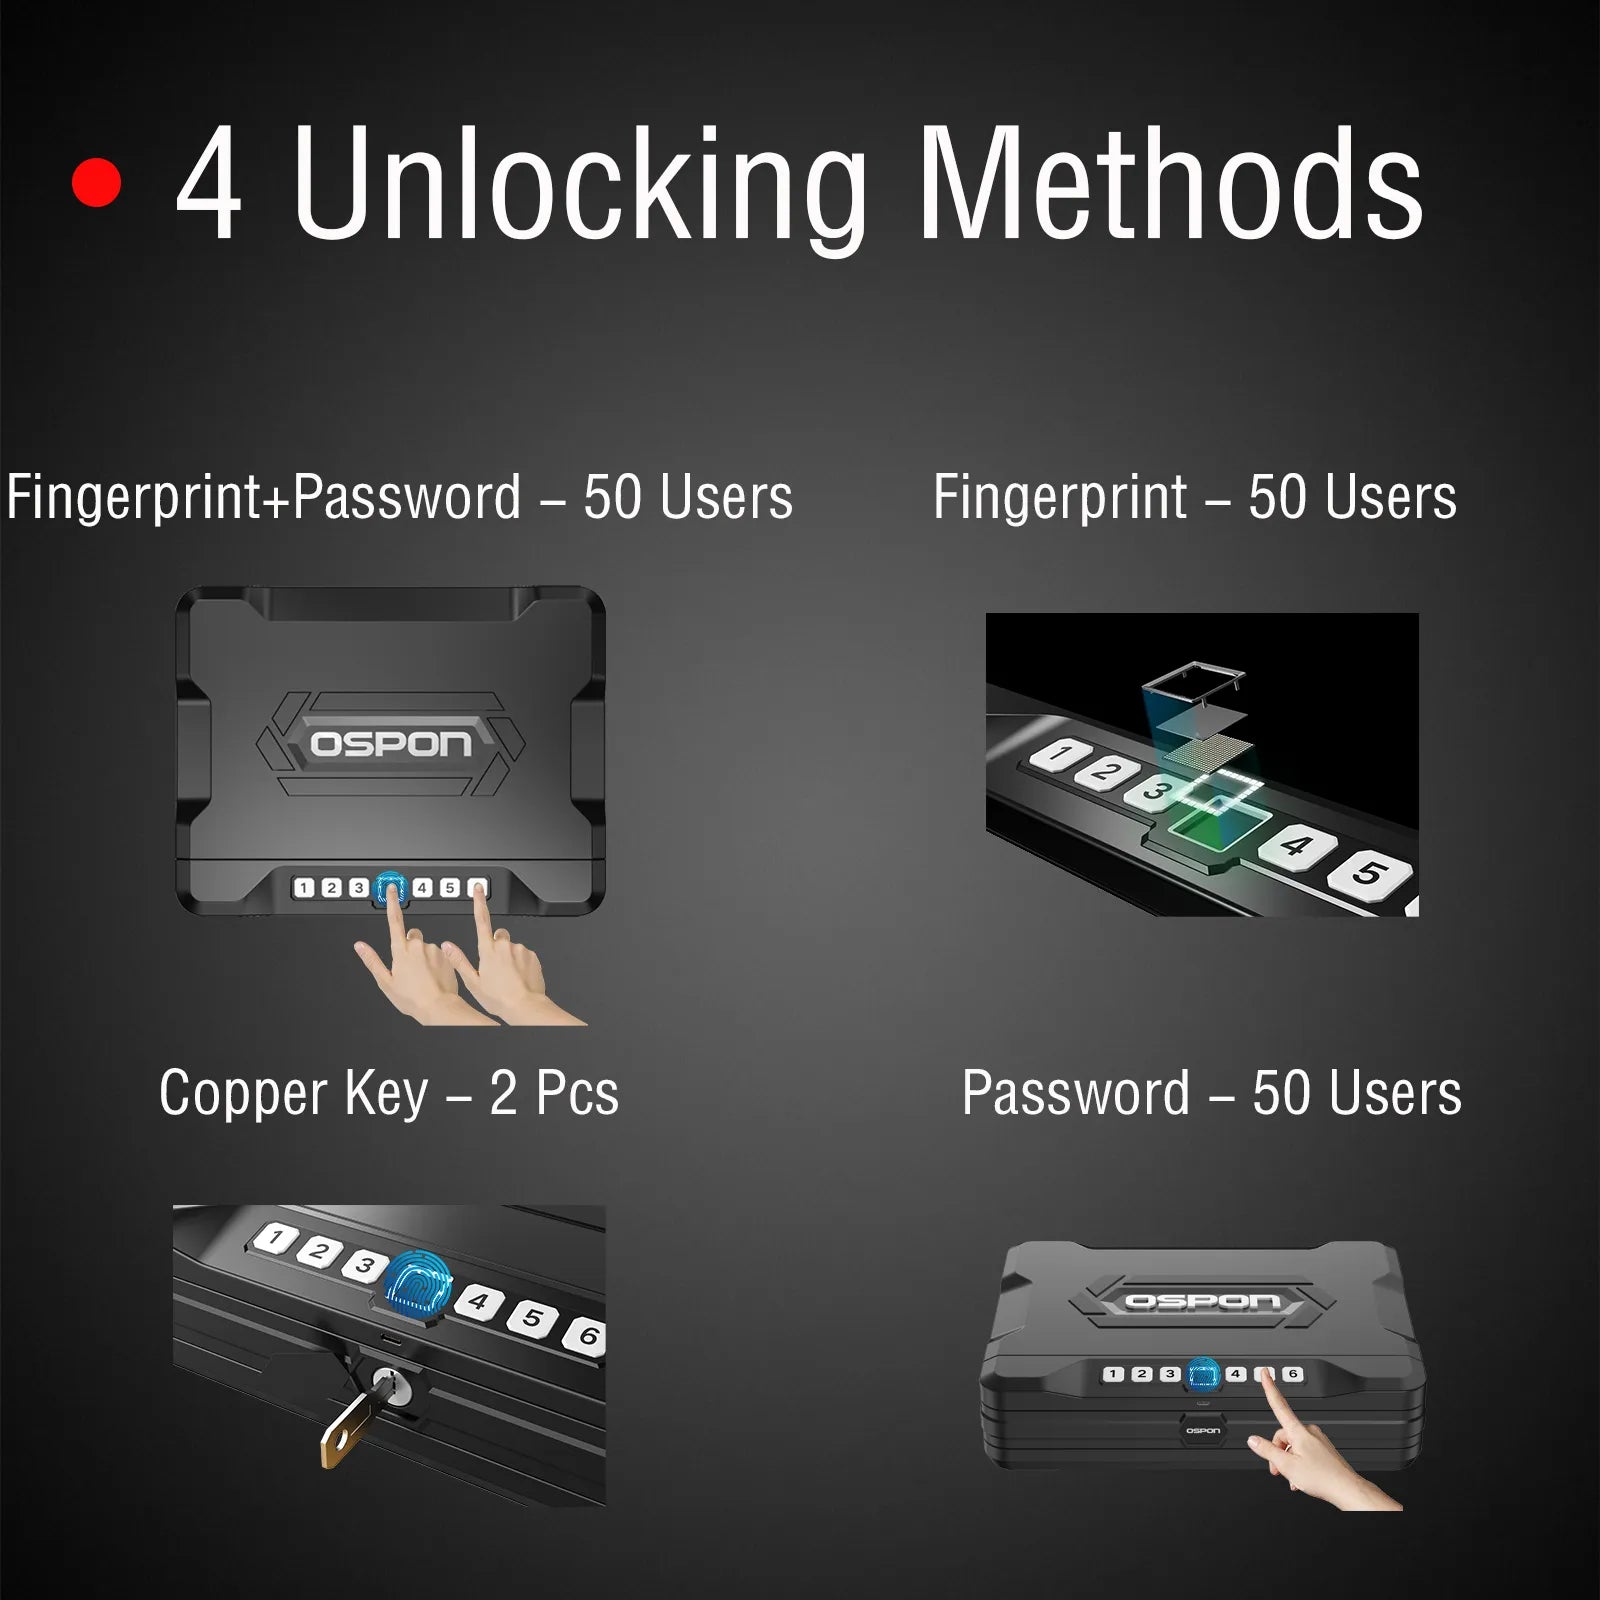 Biometric Fingerprint Digital Password Quick-Access Firearm Safety Vault